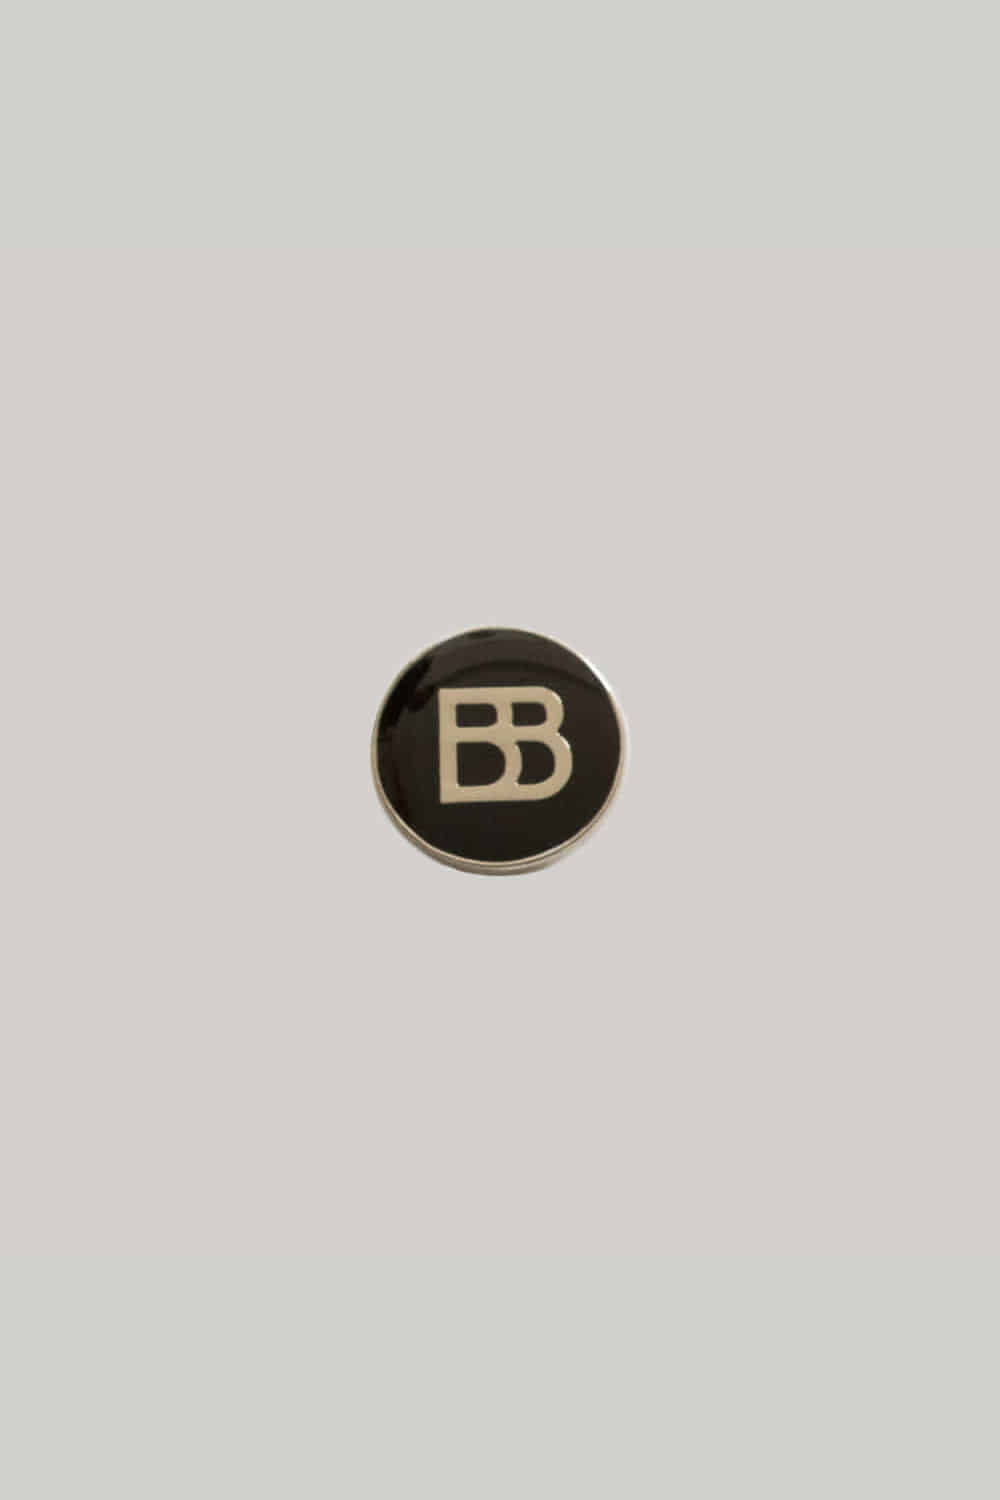 BB Pin - Black 티셔츠, 워시드 헤비웨이트 티셔츠, 옥스포드셔츠, 버튼다운셔츠, 메신저백, 캔버스백